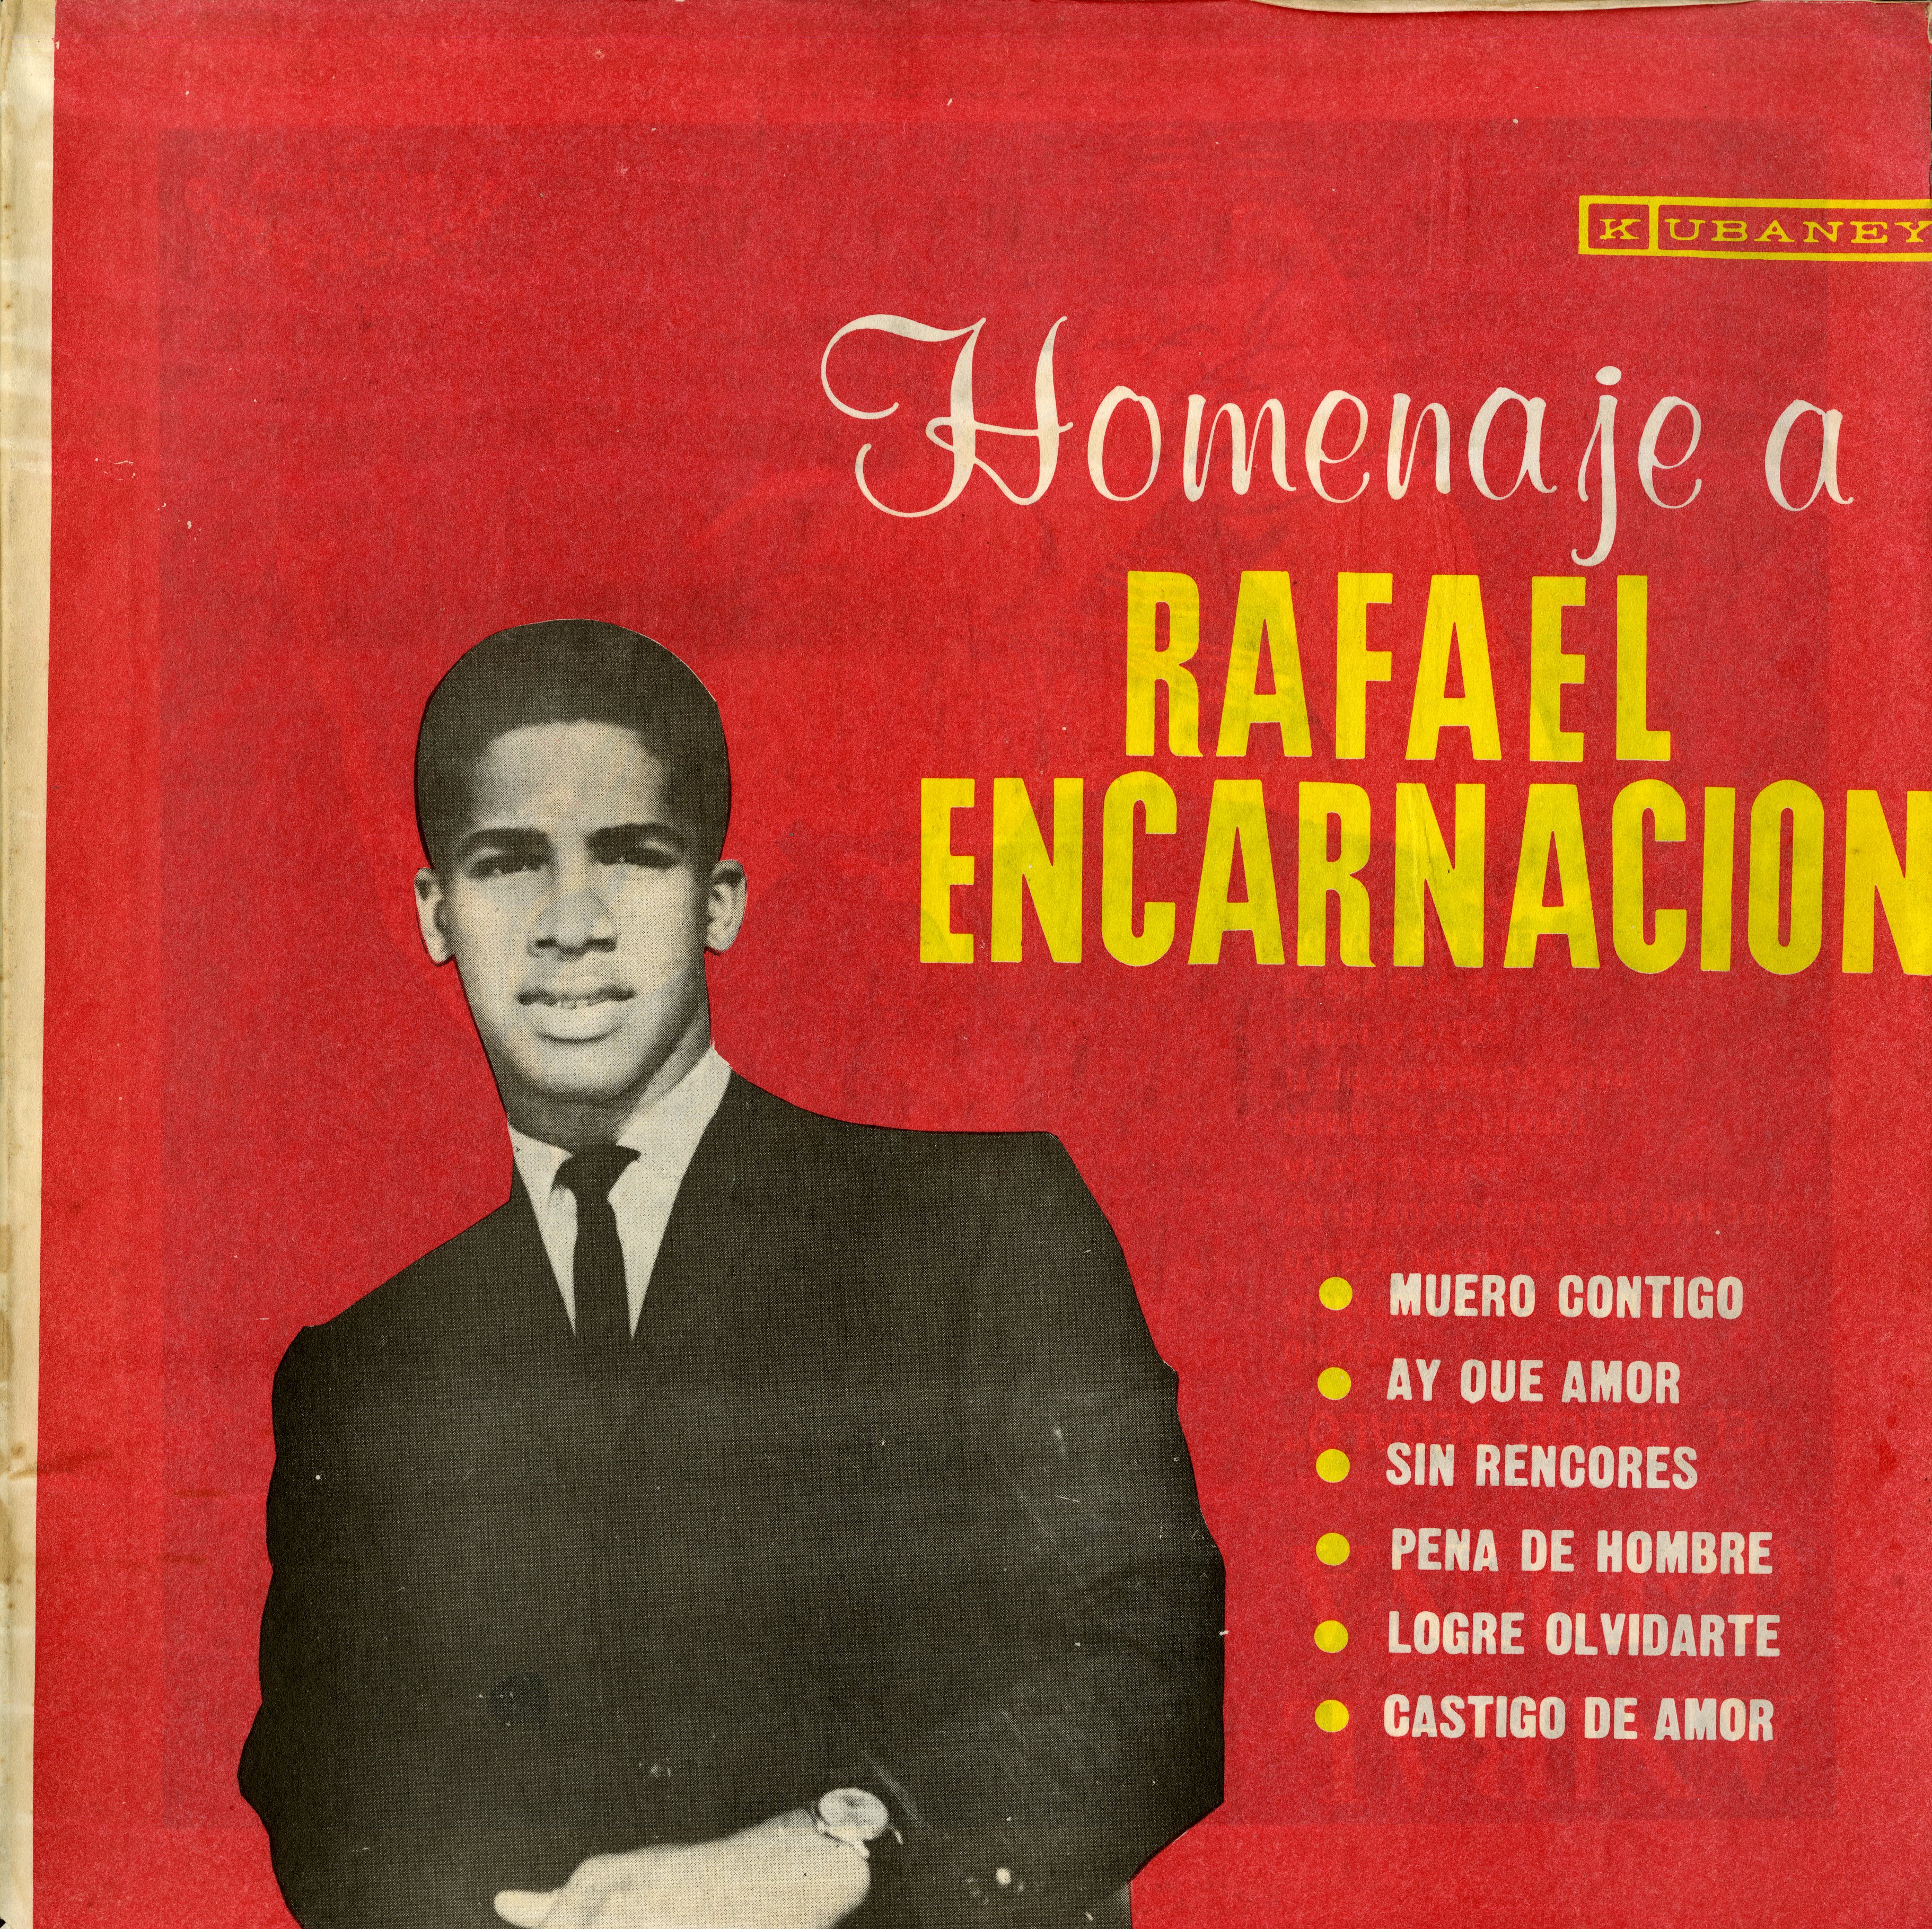 Homenaje a Rafael Encarnación LP album cover, ca. 1960s